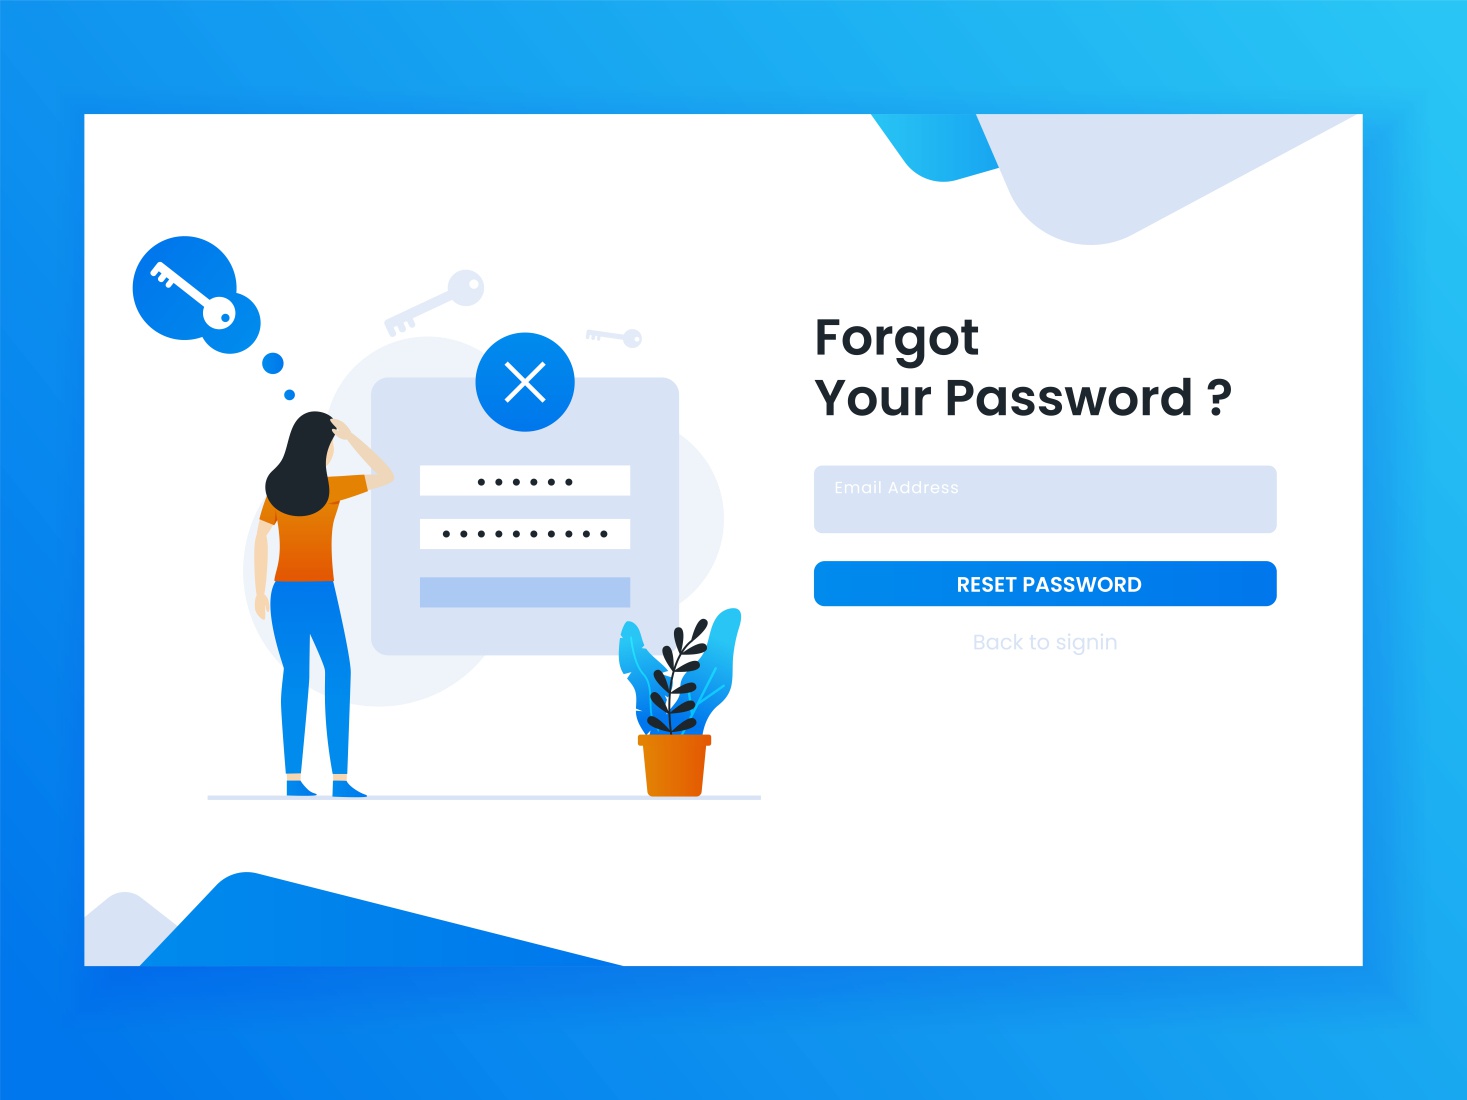 OTP based password reset